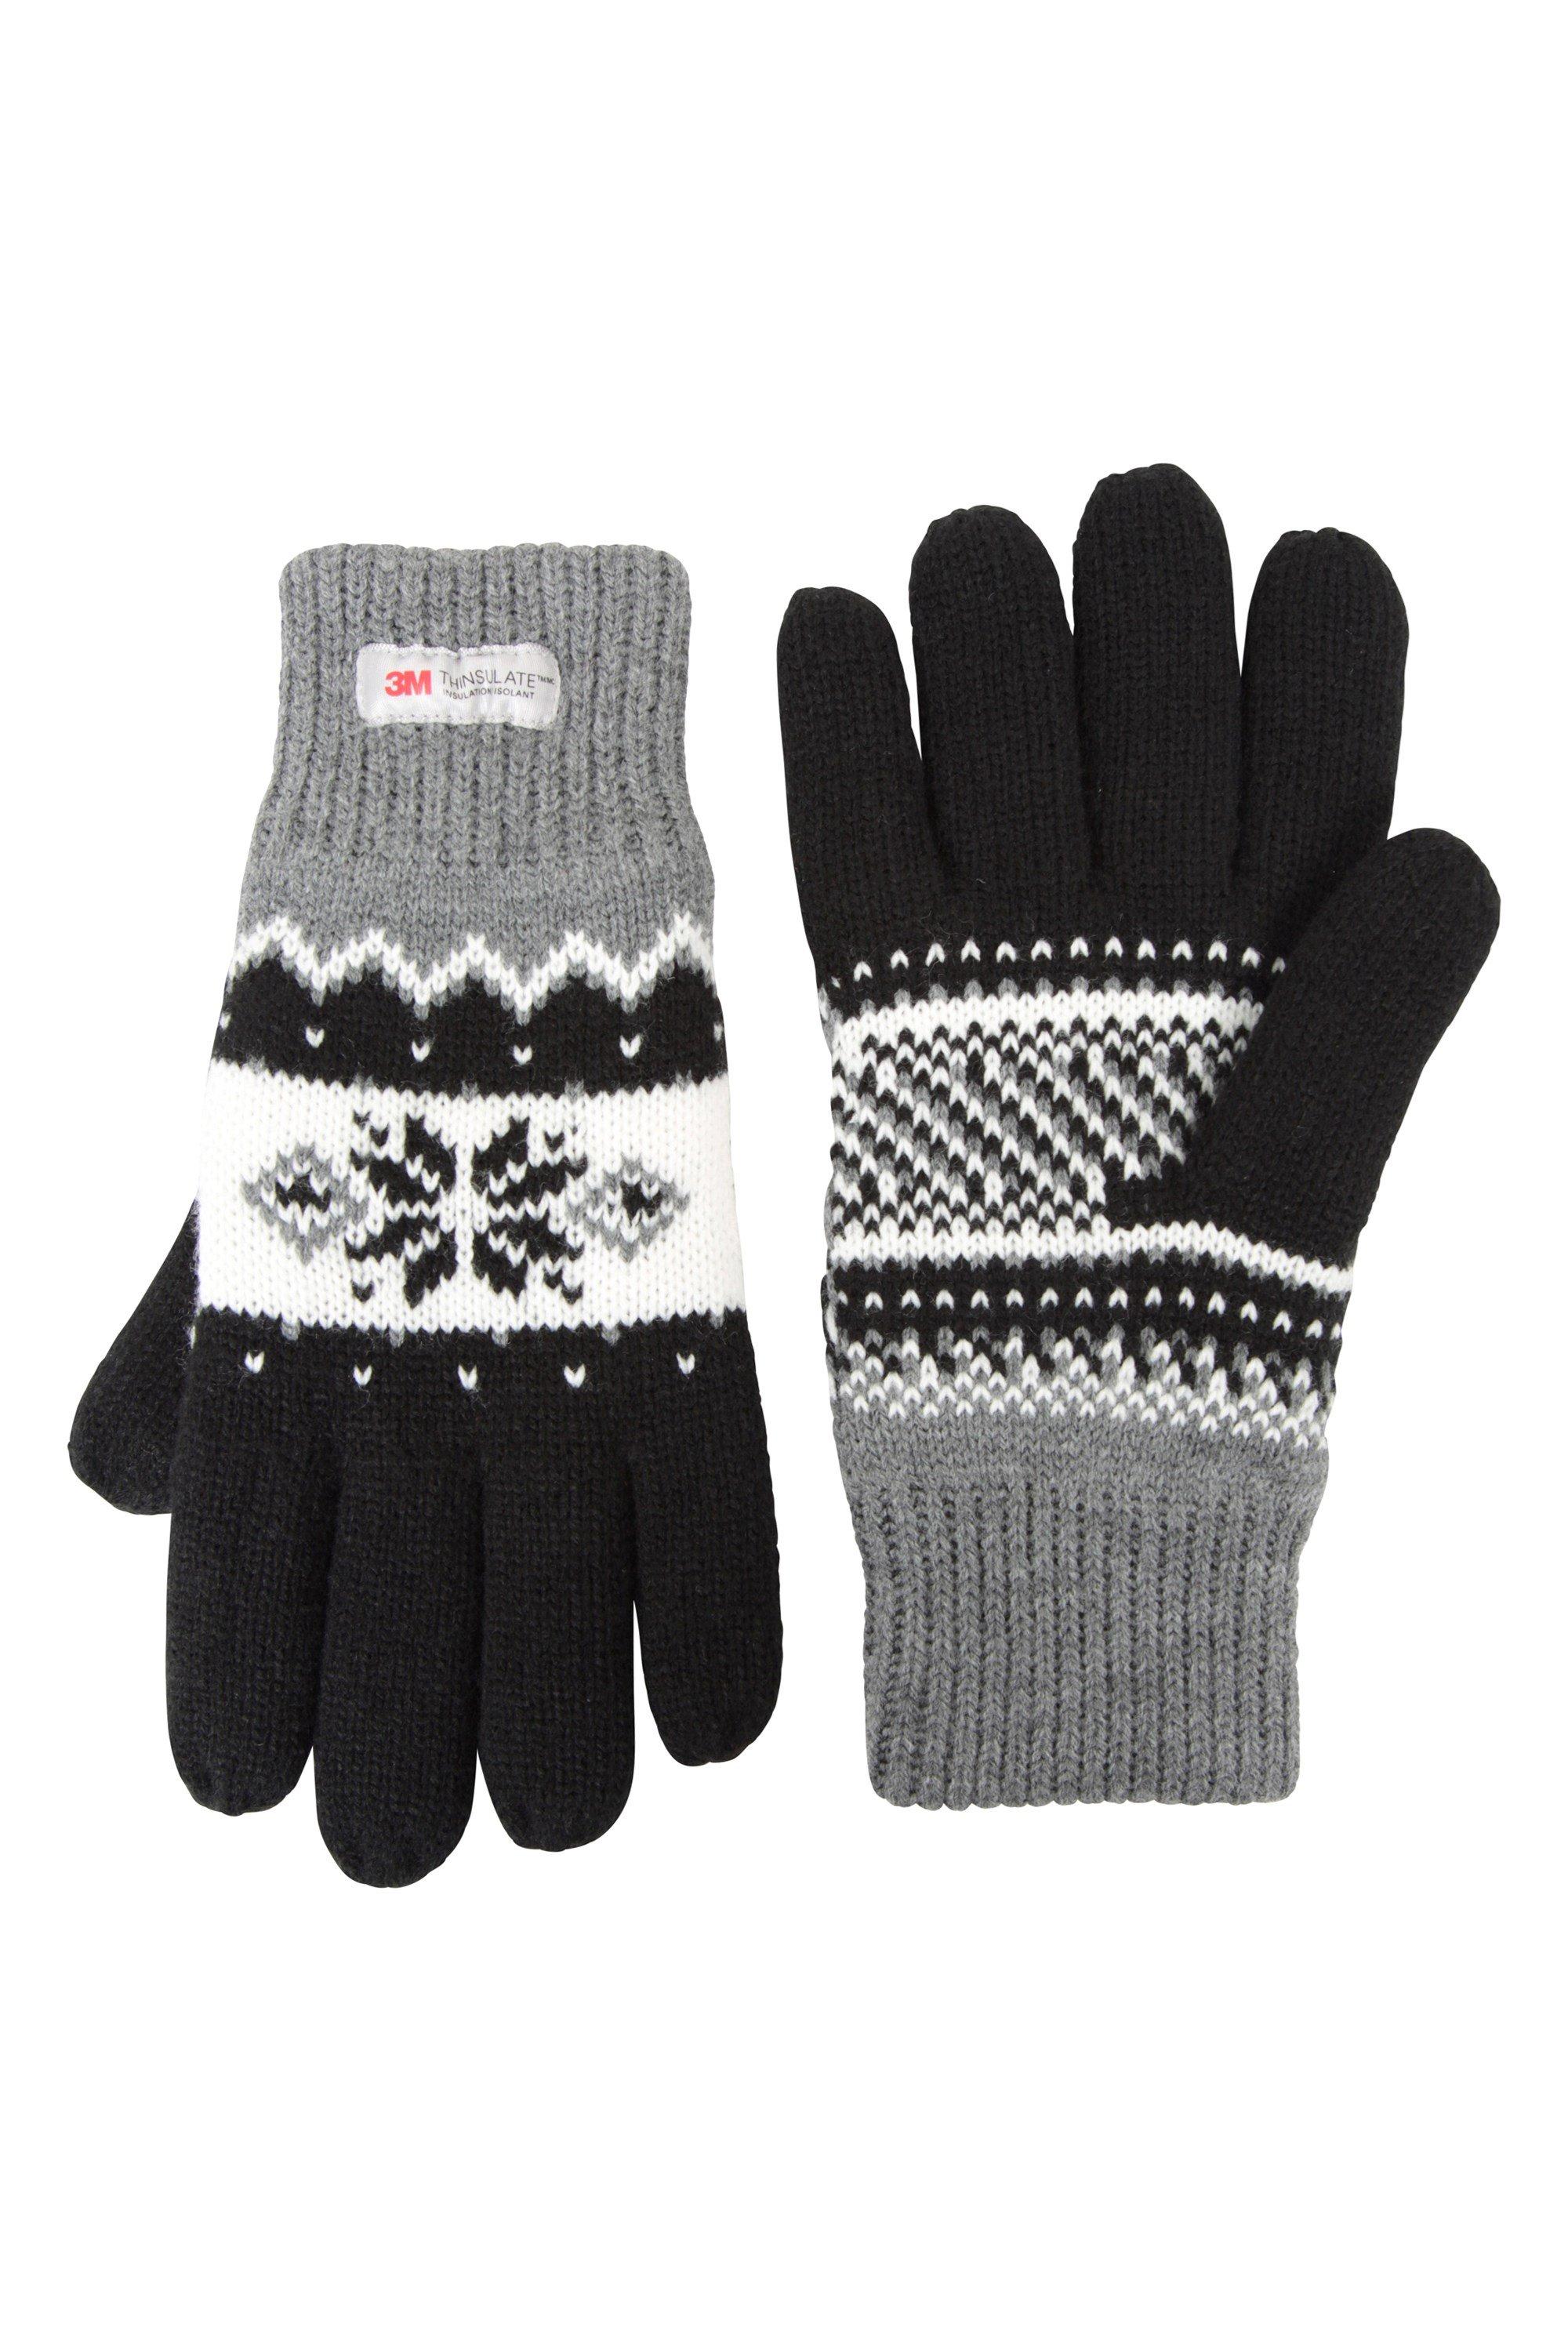 Thinsulate Fairisle Glove Трикотажные зимние теплые перчатки Mountain Warehouse, черный единорог перчатка трикотажные зимние теплые мягкие перчатки mountain warehouse фиолетовый